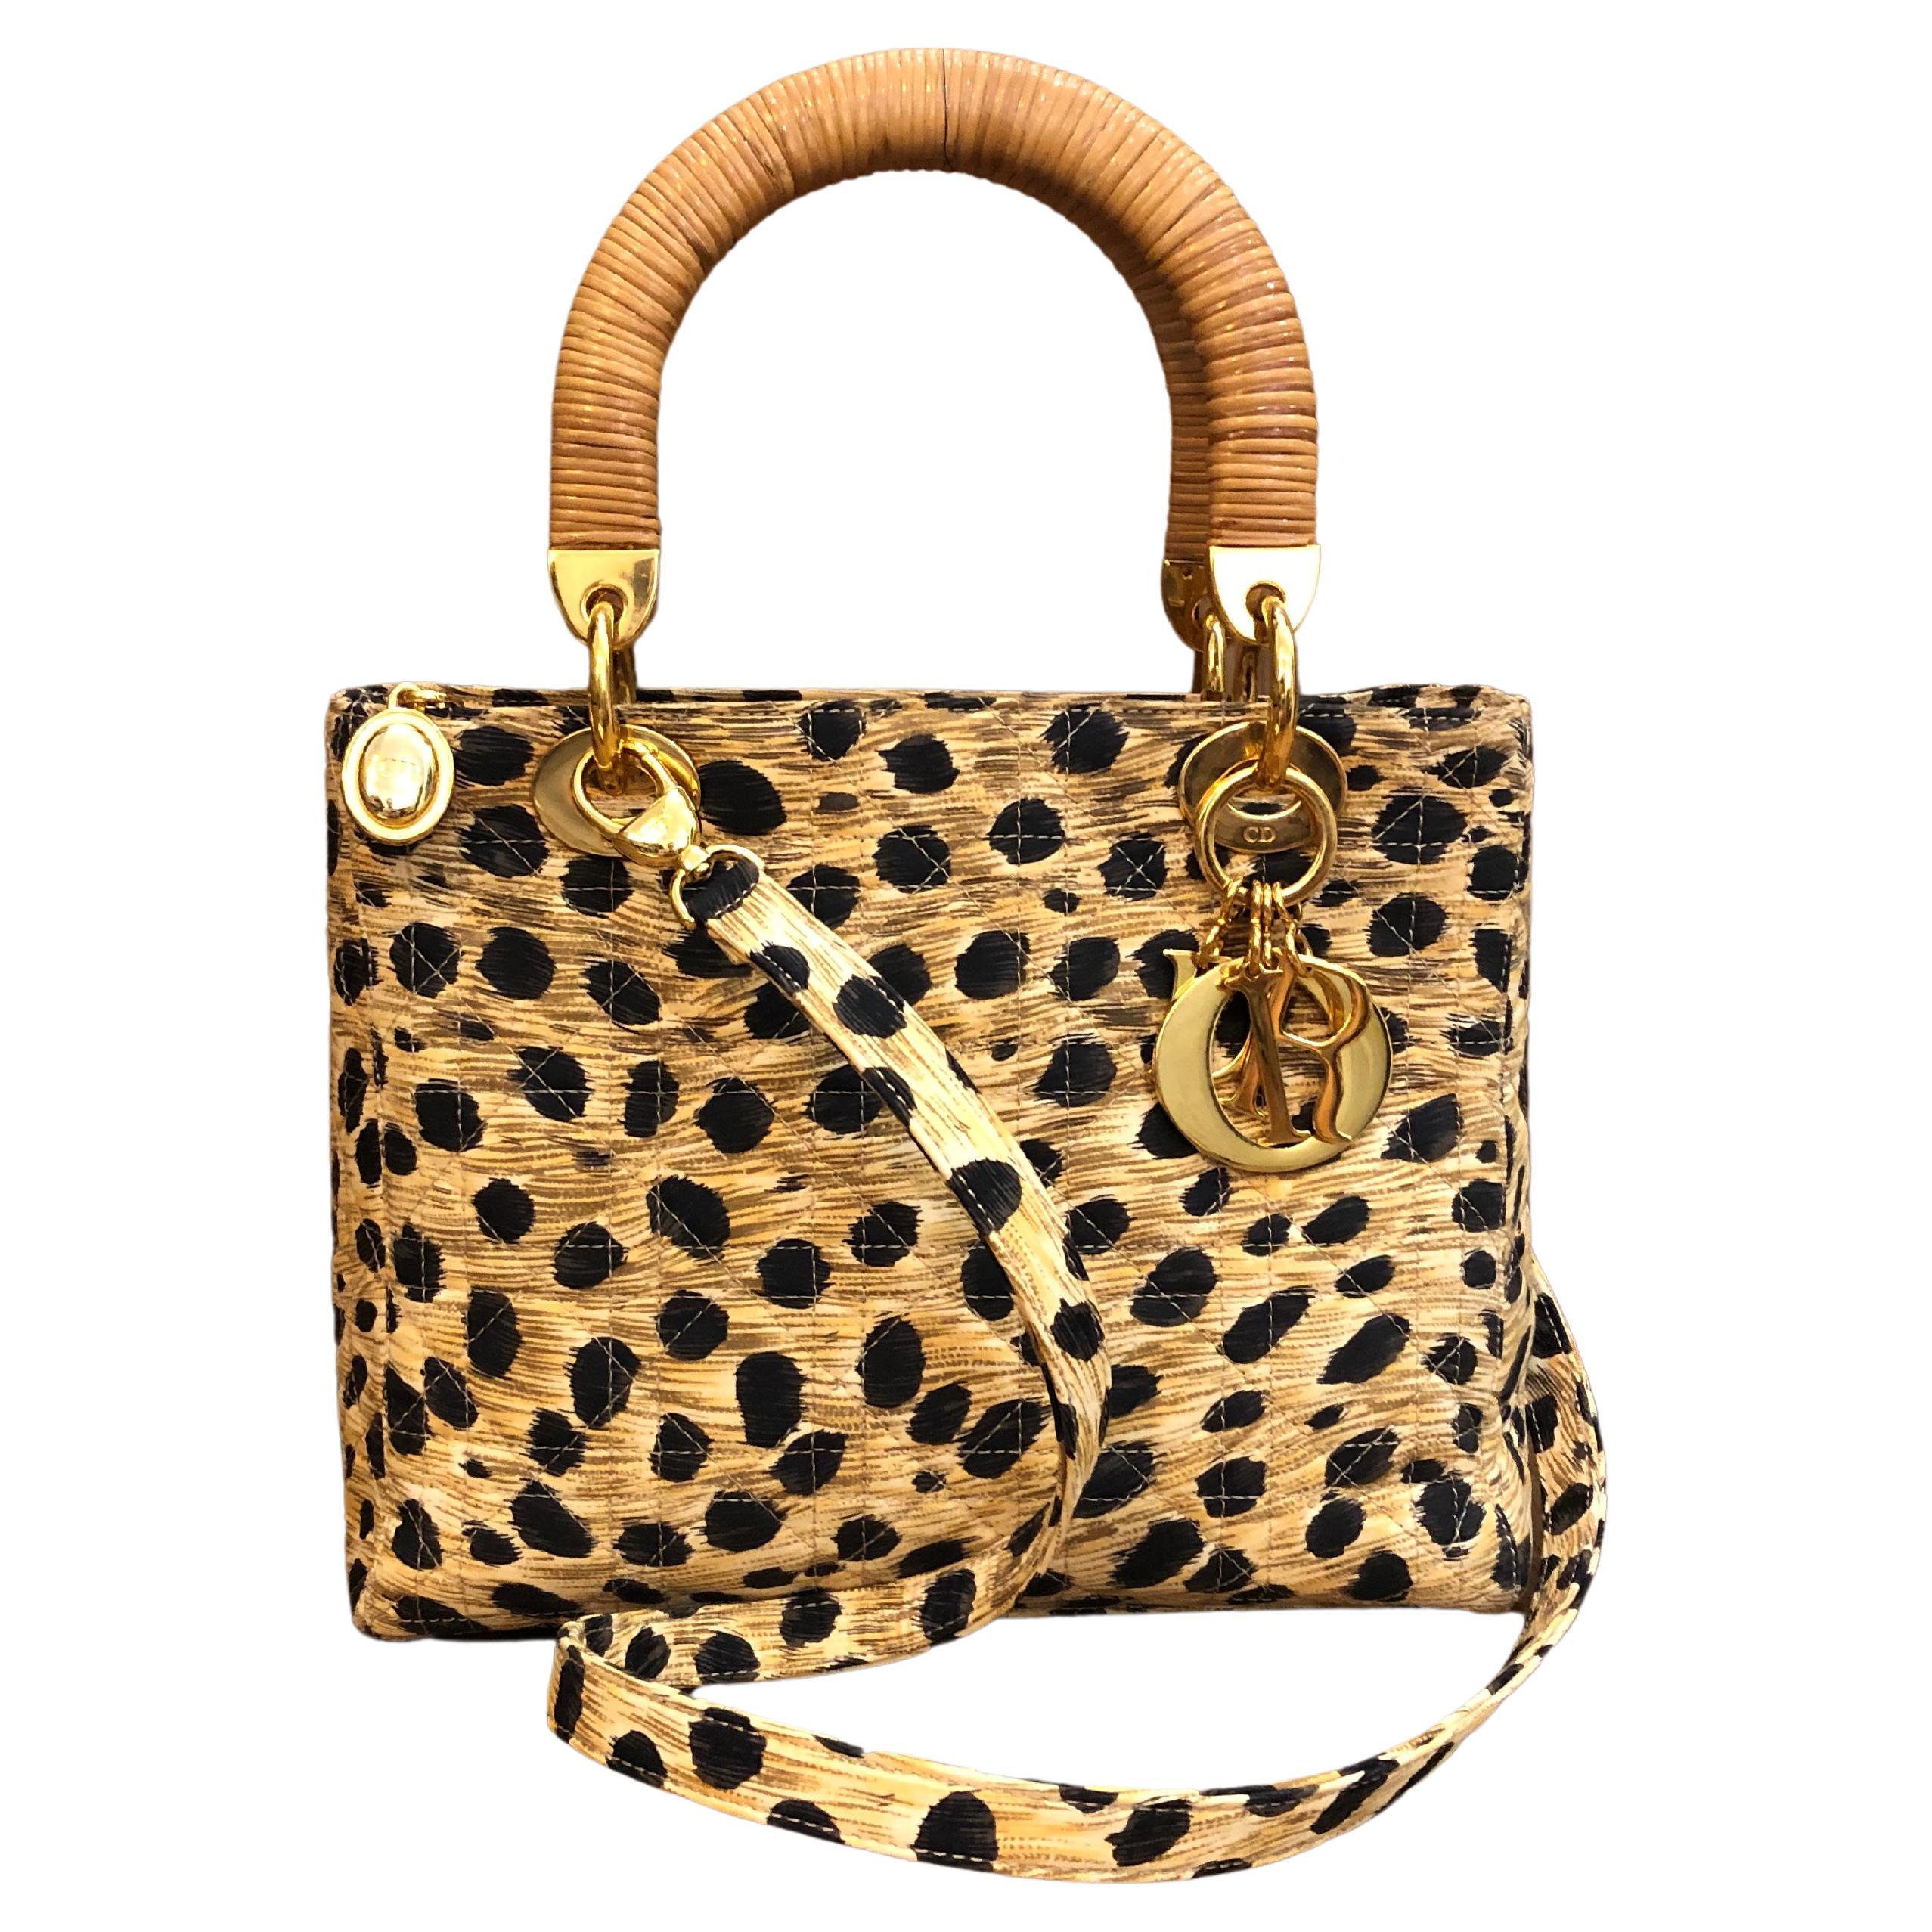 CHRISTIAN DIOR Petit sac à main vintage léopard Lady Dior à 2 anses en rotin